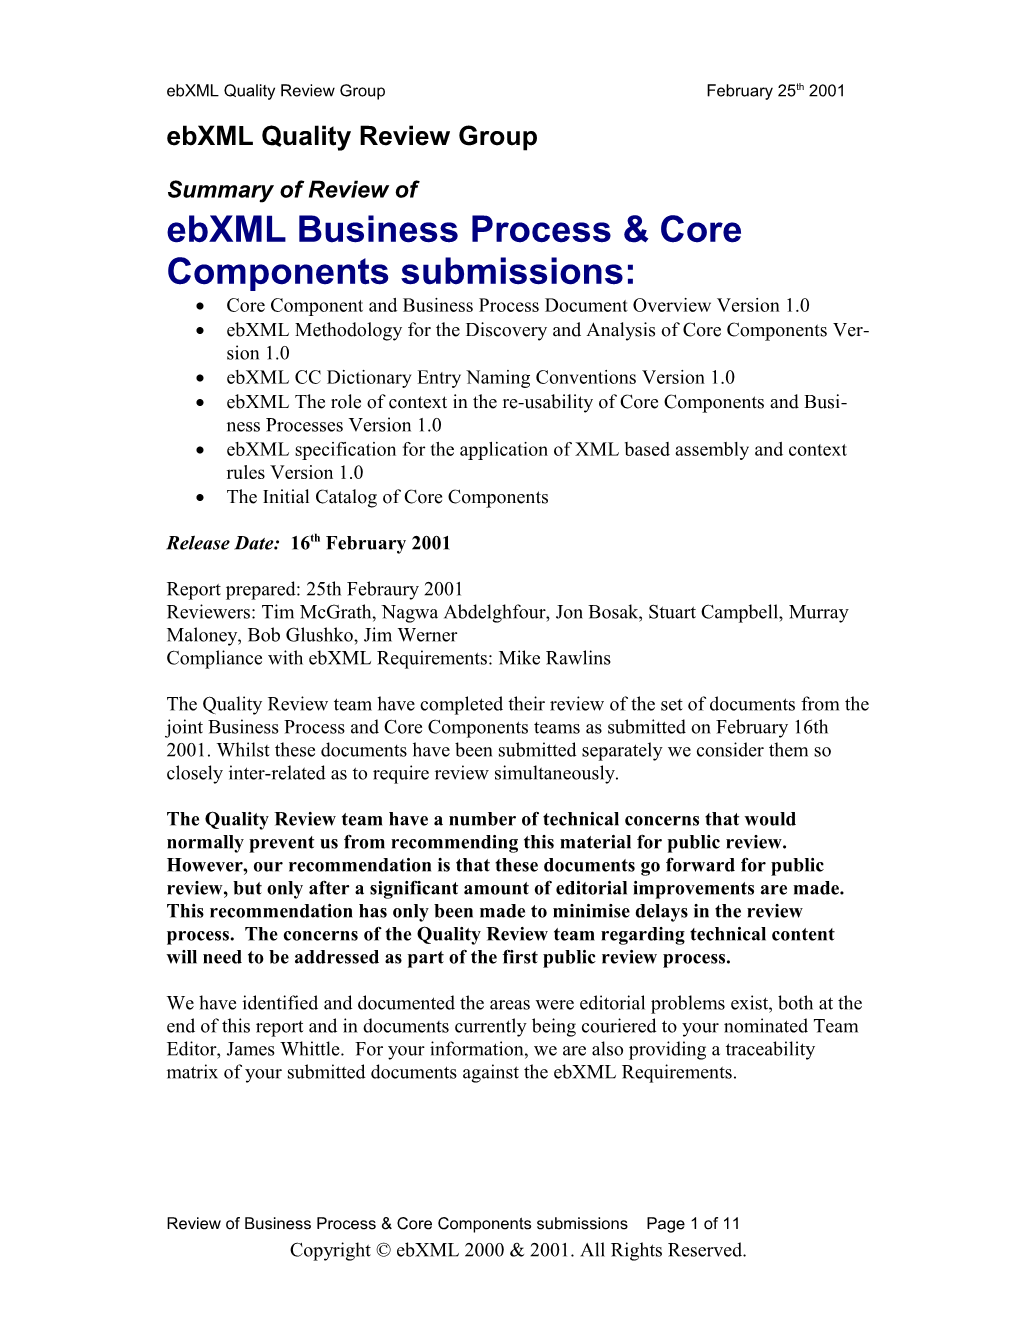 Ebxml Quality Review Core Components